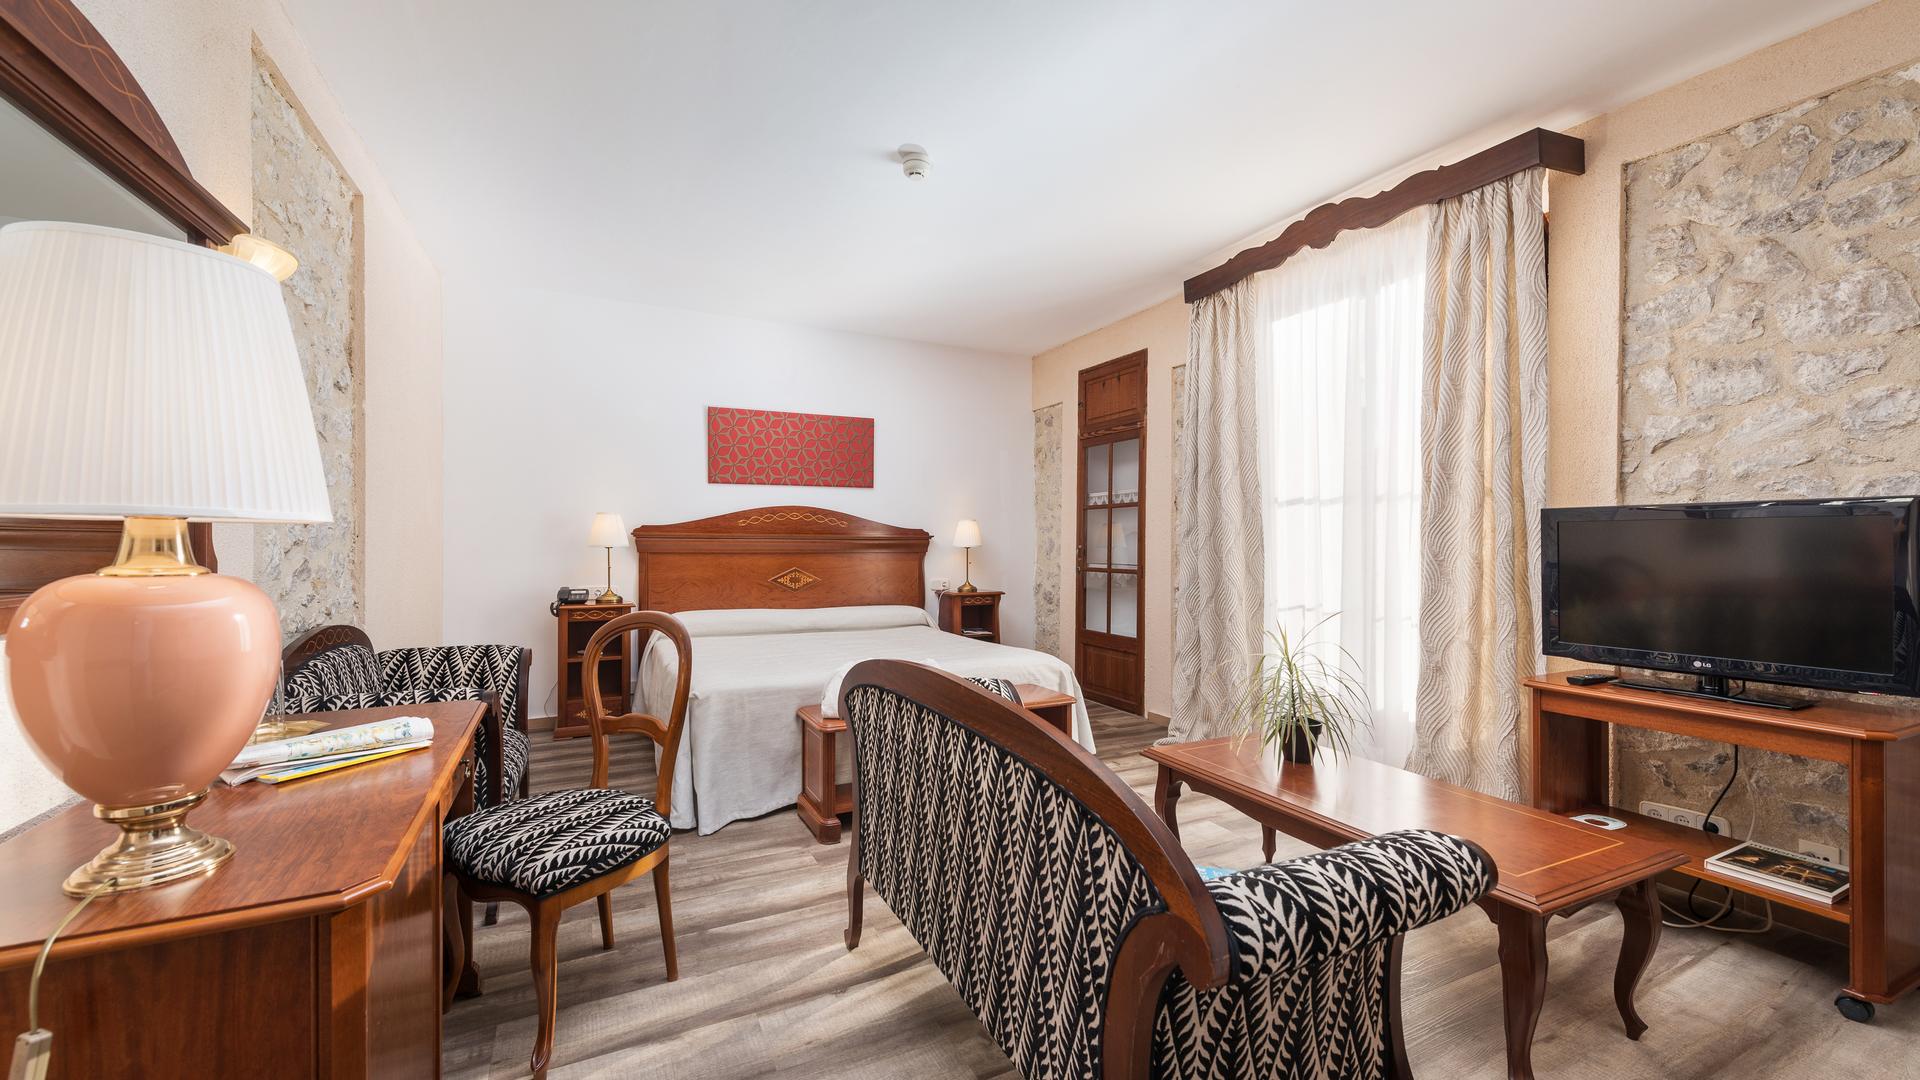 Habitaciones Deluxe - DOBLE DELUXE monnaber nou 1 - Hotel Rural Mallorca Monnaber Nou